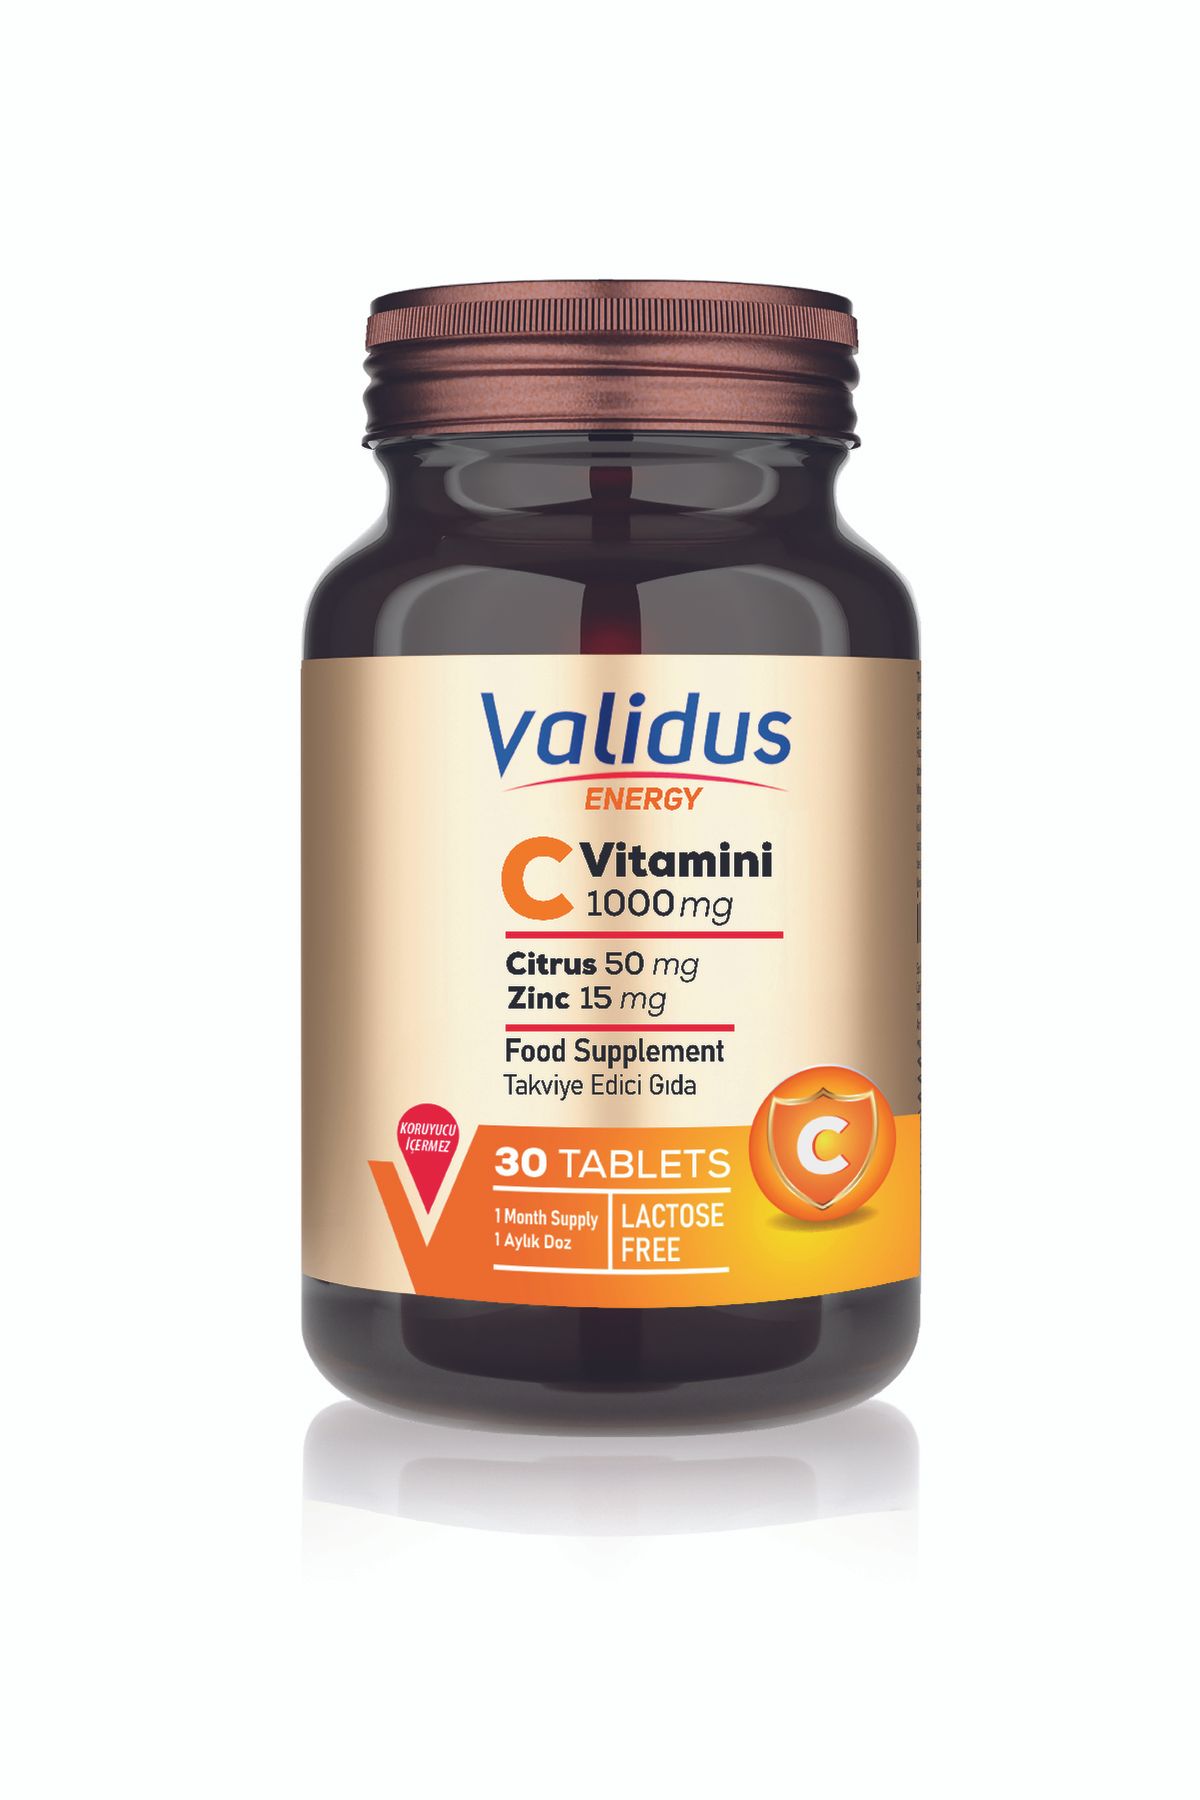 Validus C Vitamini 1000mg + Citrus + Zinc Tablet